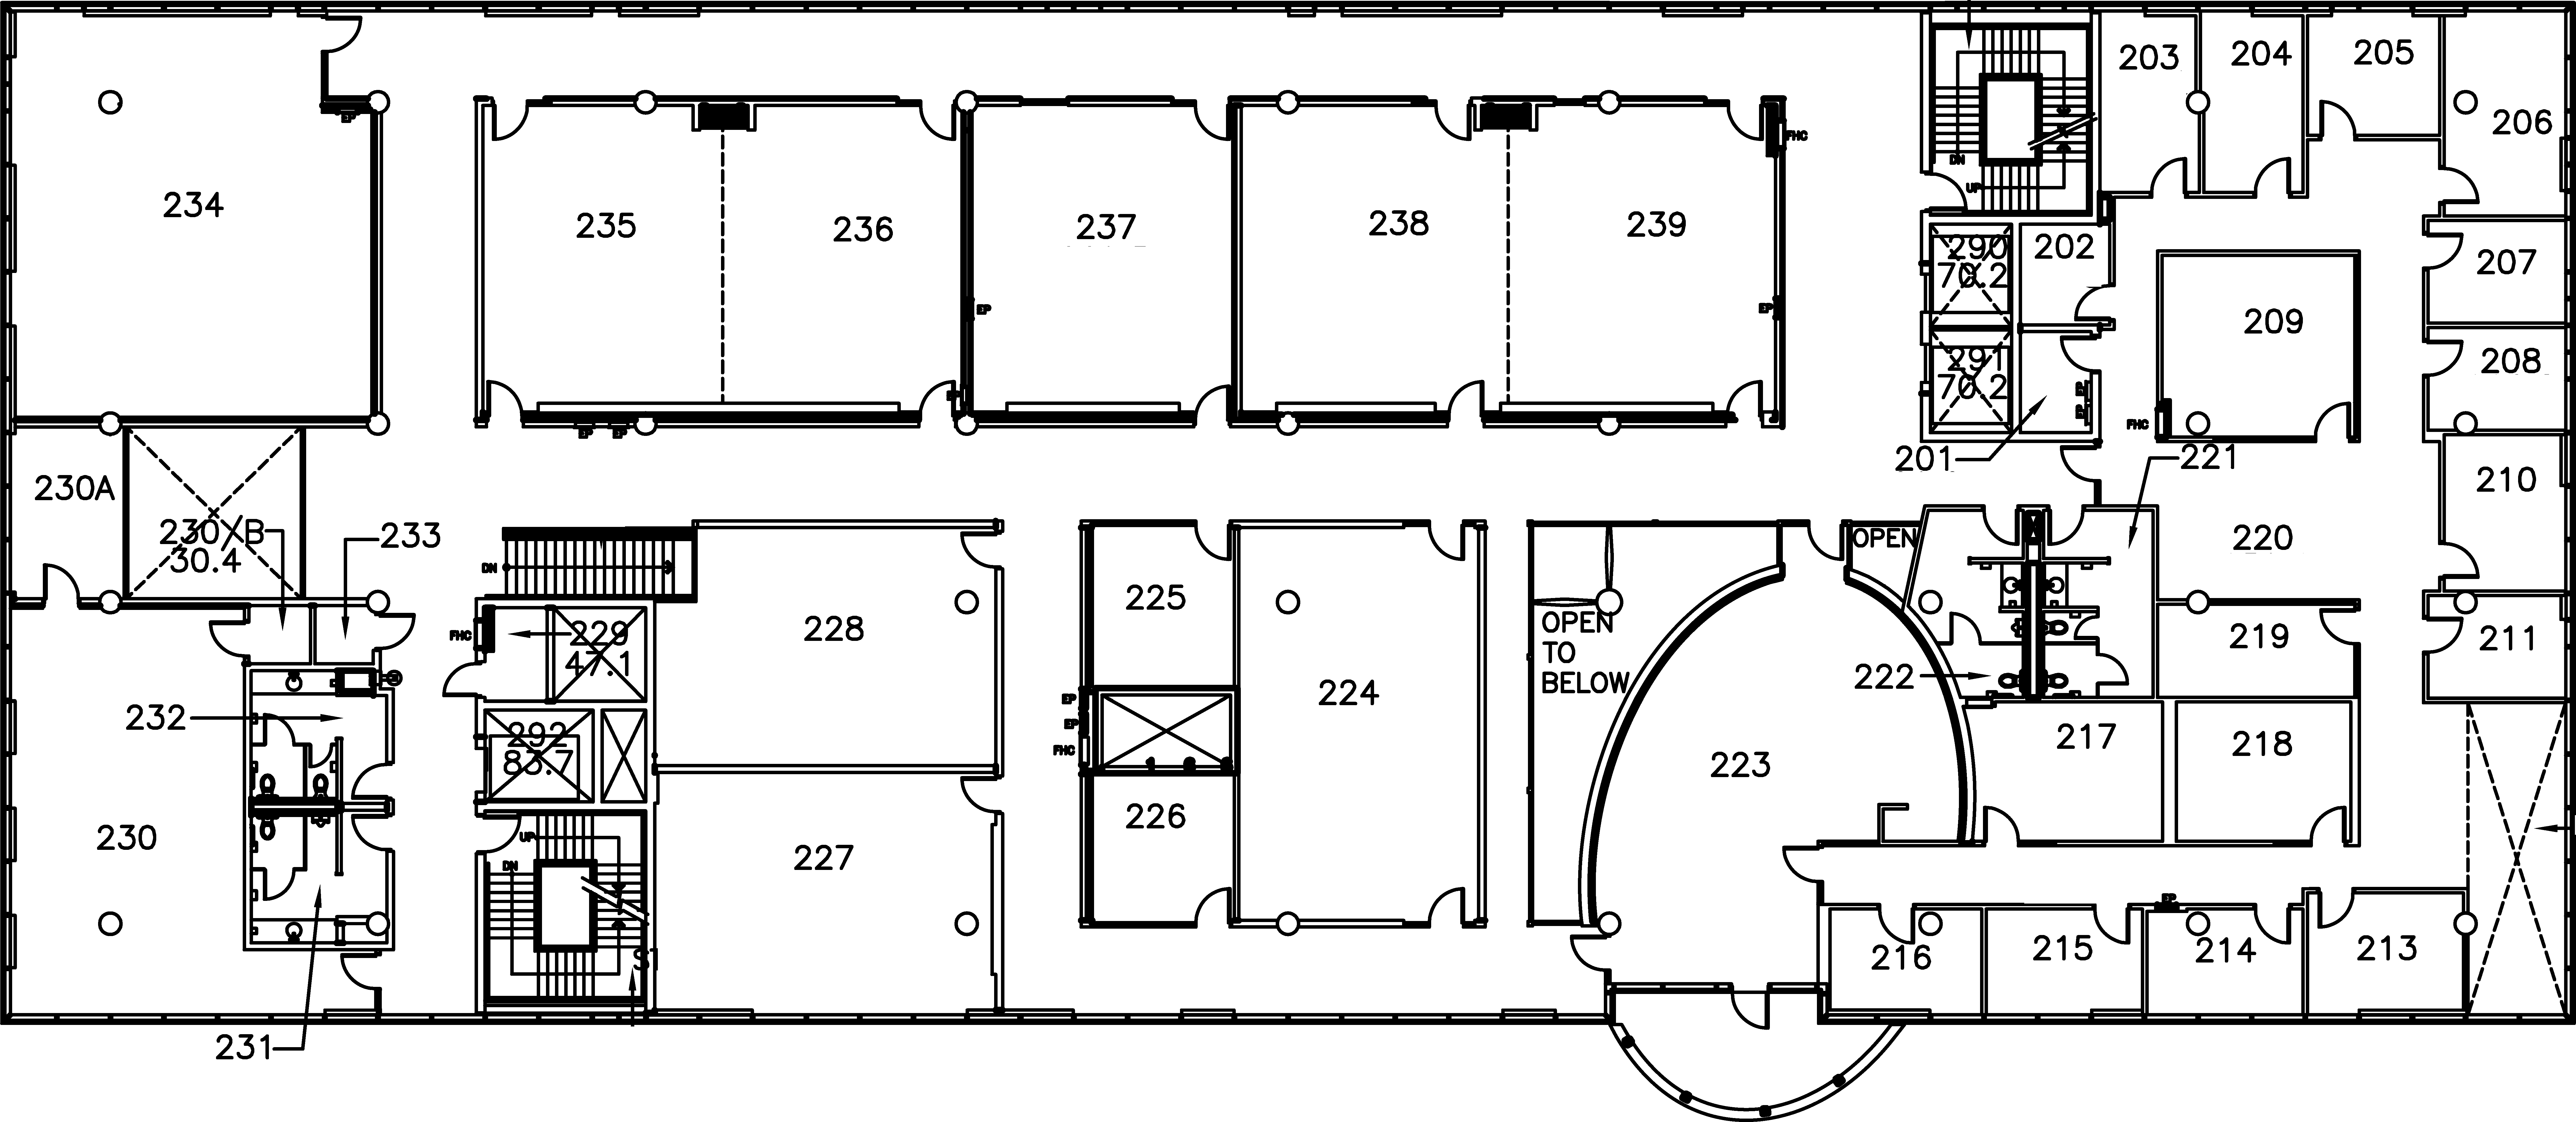 Engineering Technology Building (ETB) - Second Floor Map